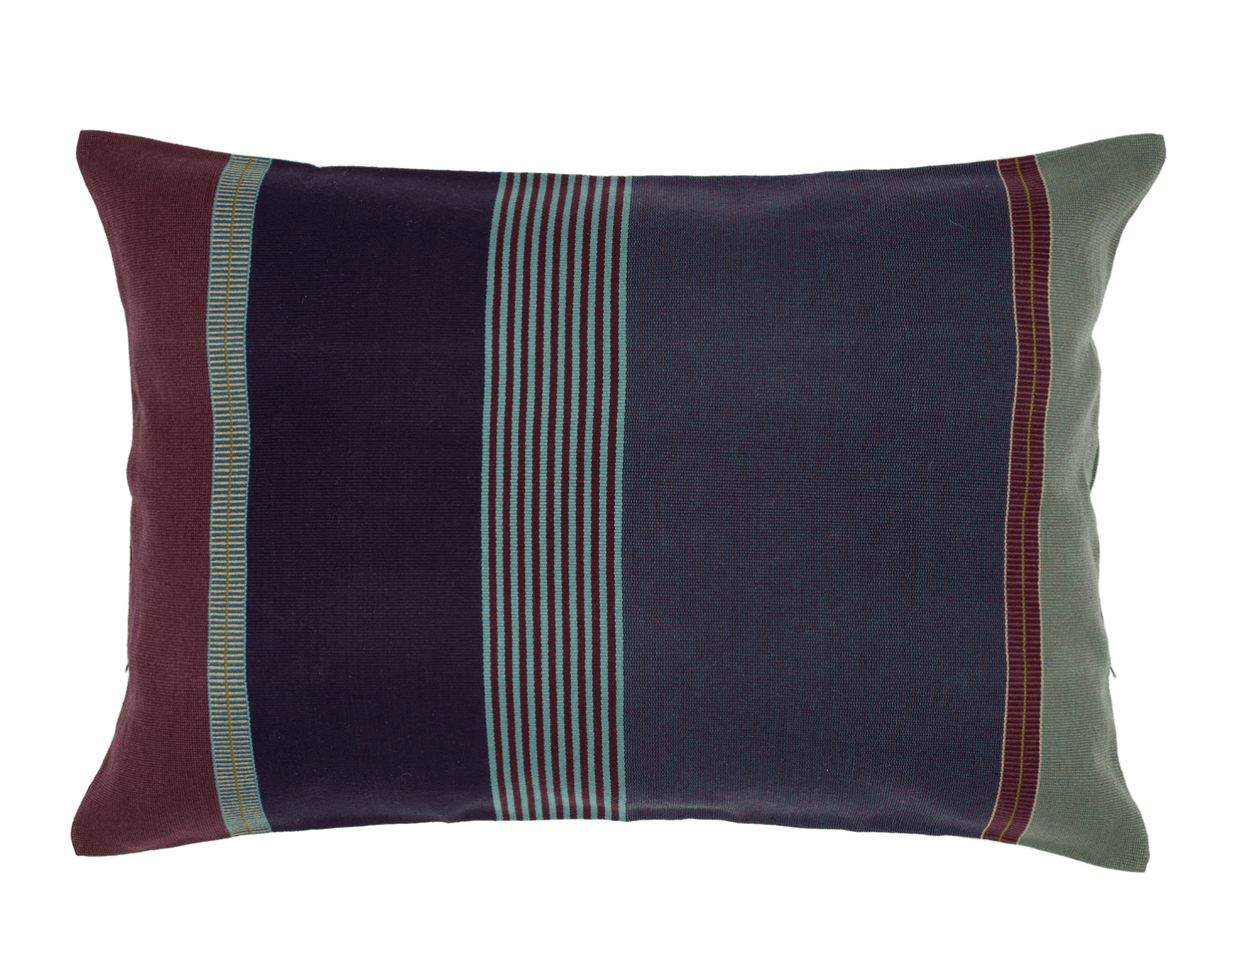 Palenque Lumbar Pillow Home, textile, Pillow Covers El Camino de los Altos 